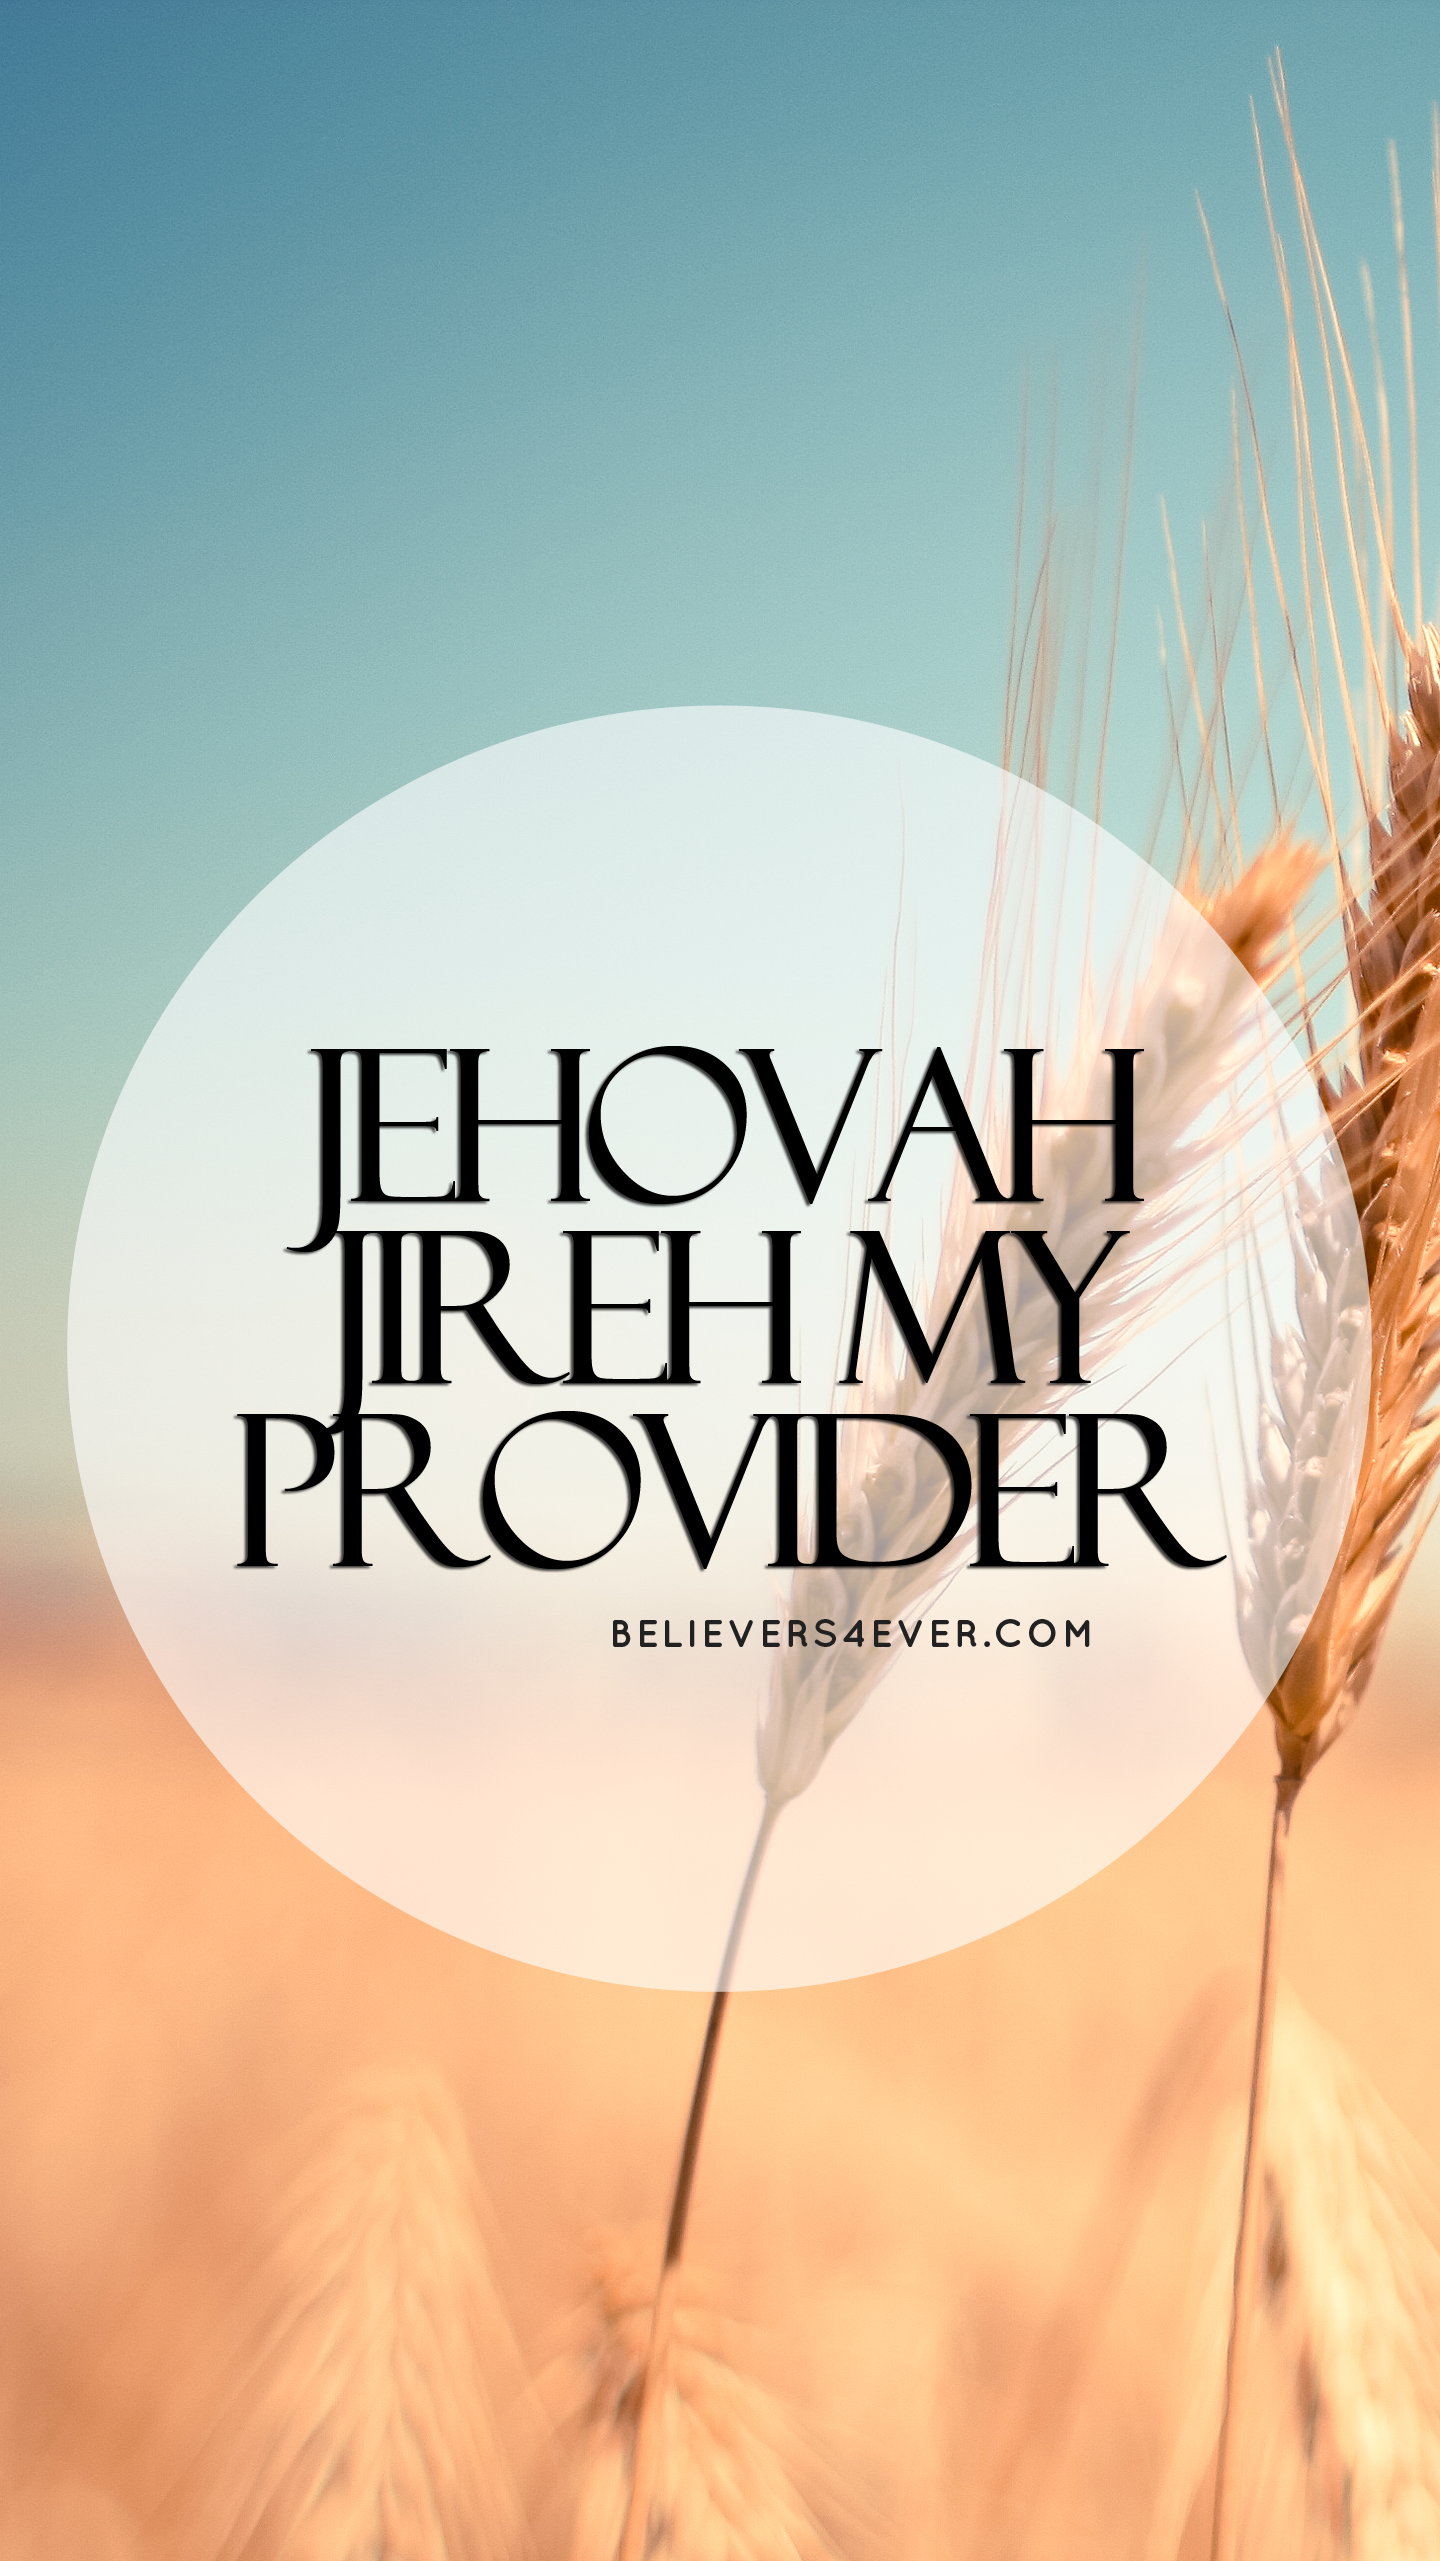 Jehovah Jireh Christian Mobile Lock Screen Wallpaper